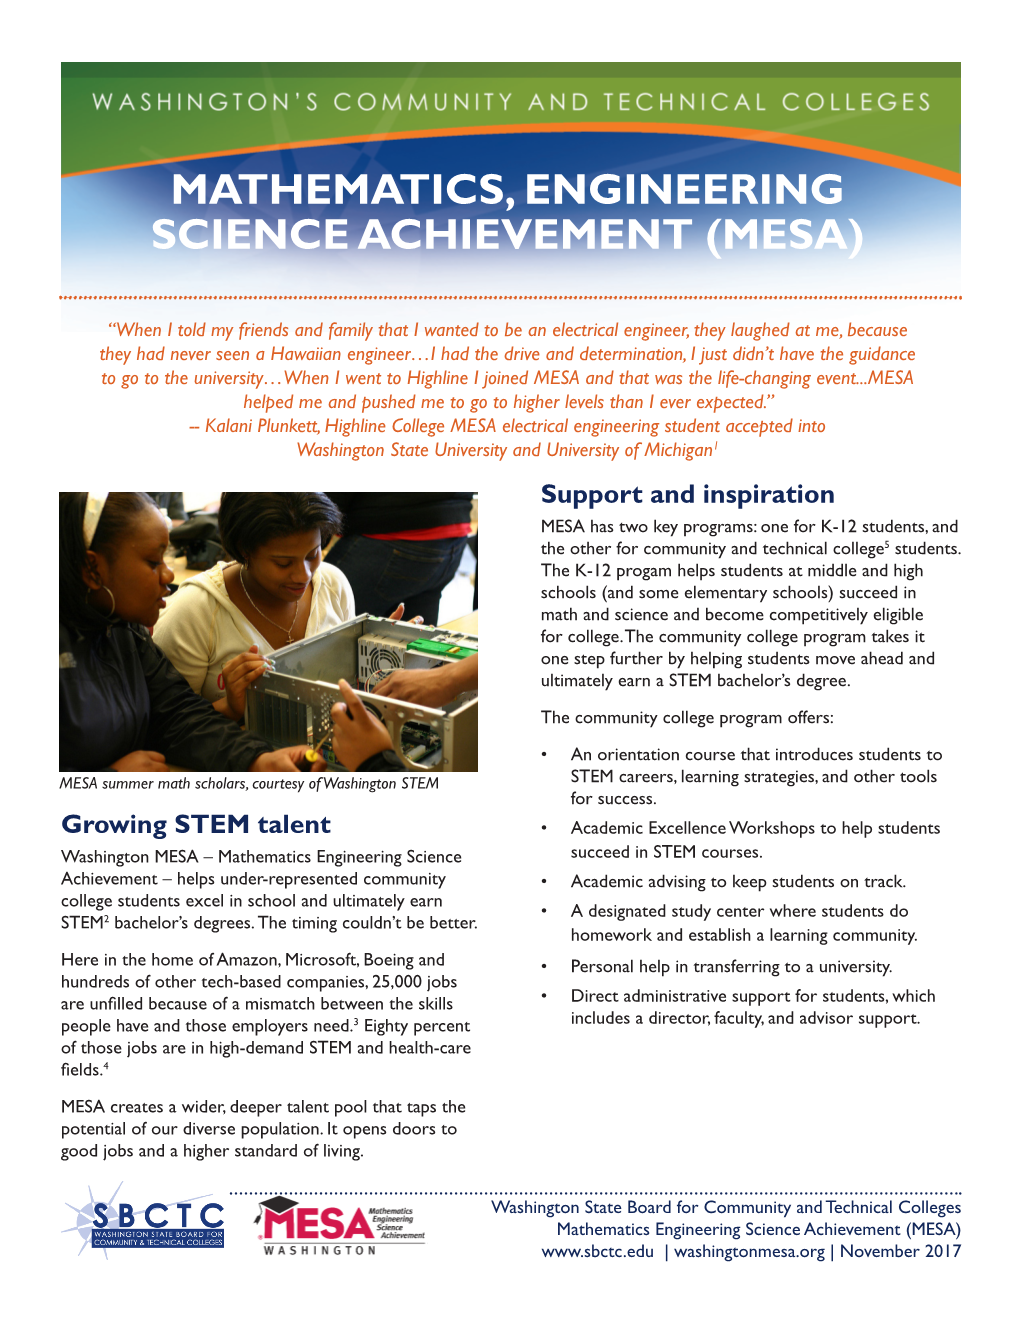 Mathematics, Engineering Science Achievement (Mesa)